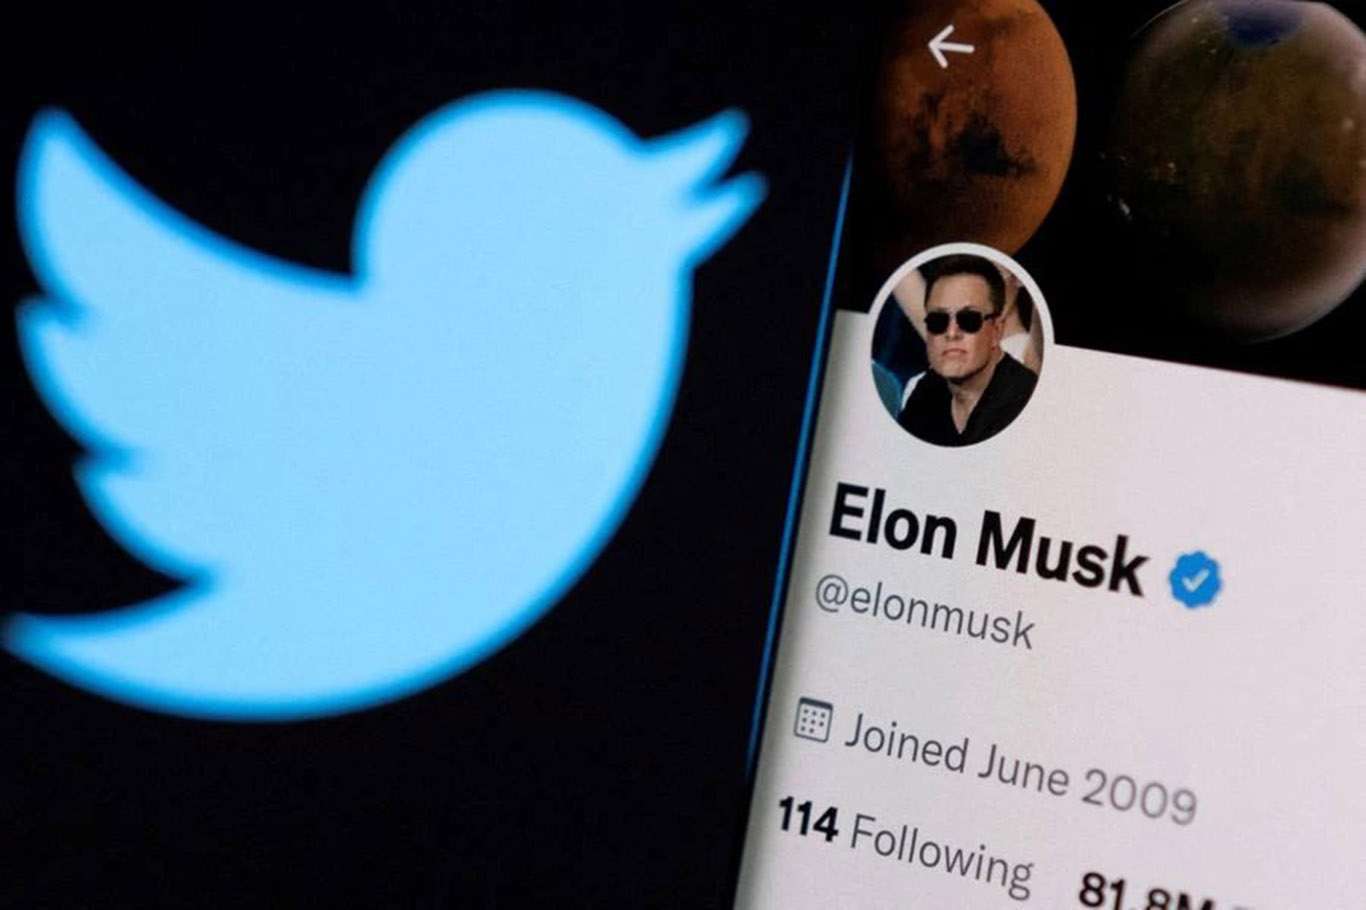 Elon Musk: Twitter deal could go forward once user data confirmed